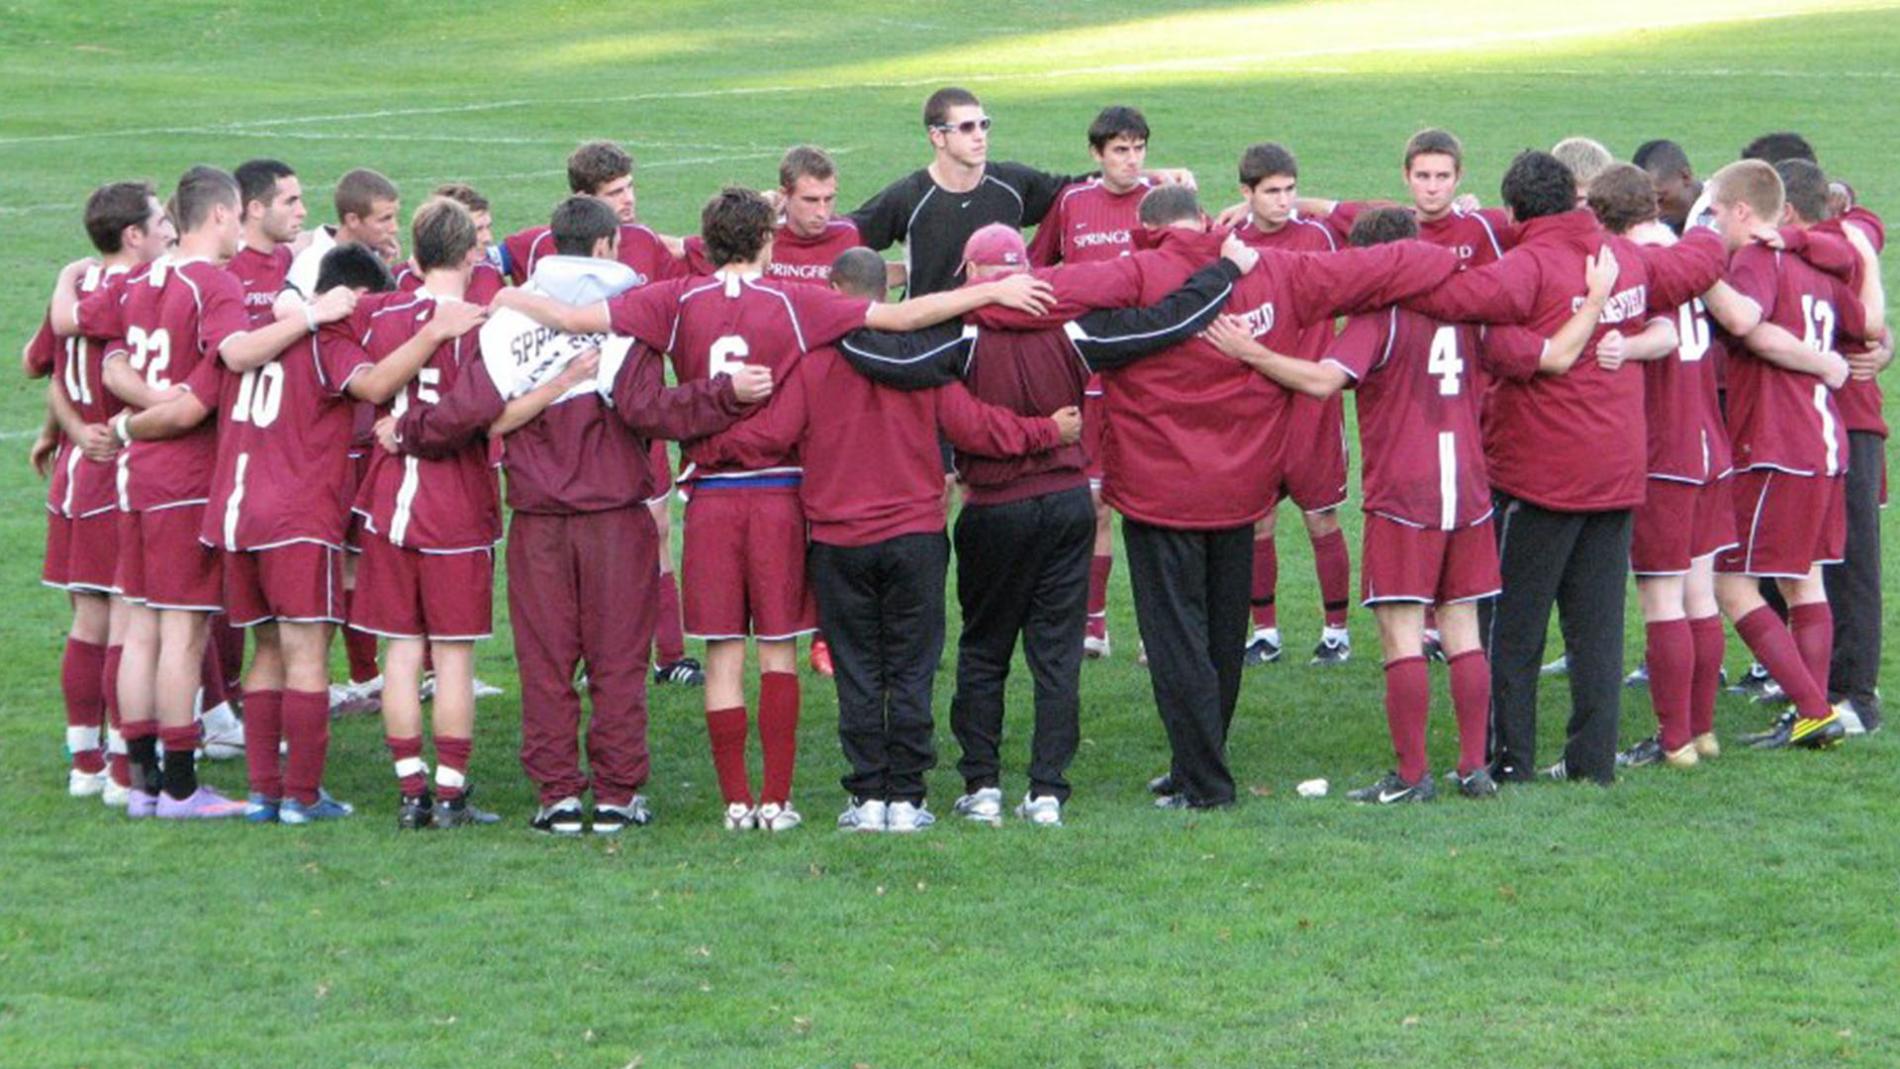 Soccer team huddled on the field. 